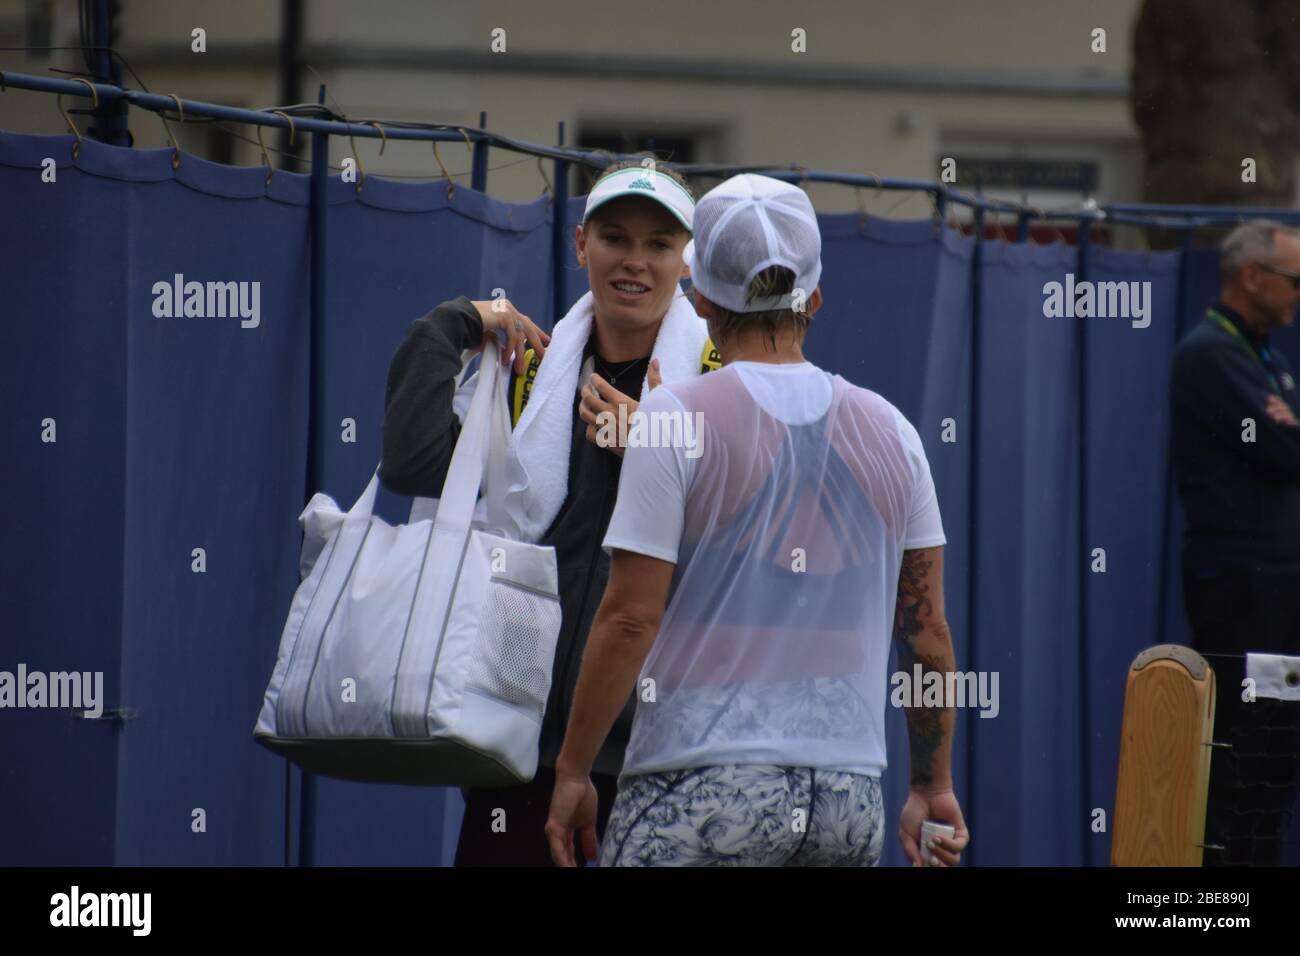 Bethanie Mattek Sands of America talking to Caroline Wozniacki of Denmark, women’s tennis players at Eastbourne Tennis on the 24th June 2019, UK Stock Photo